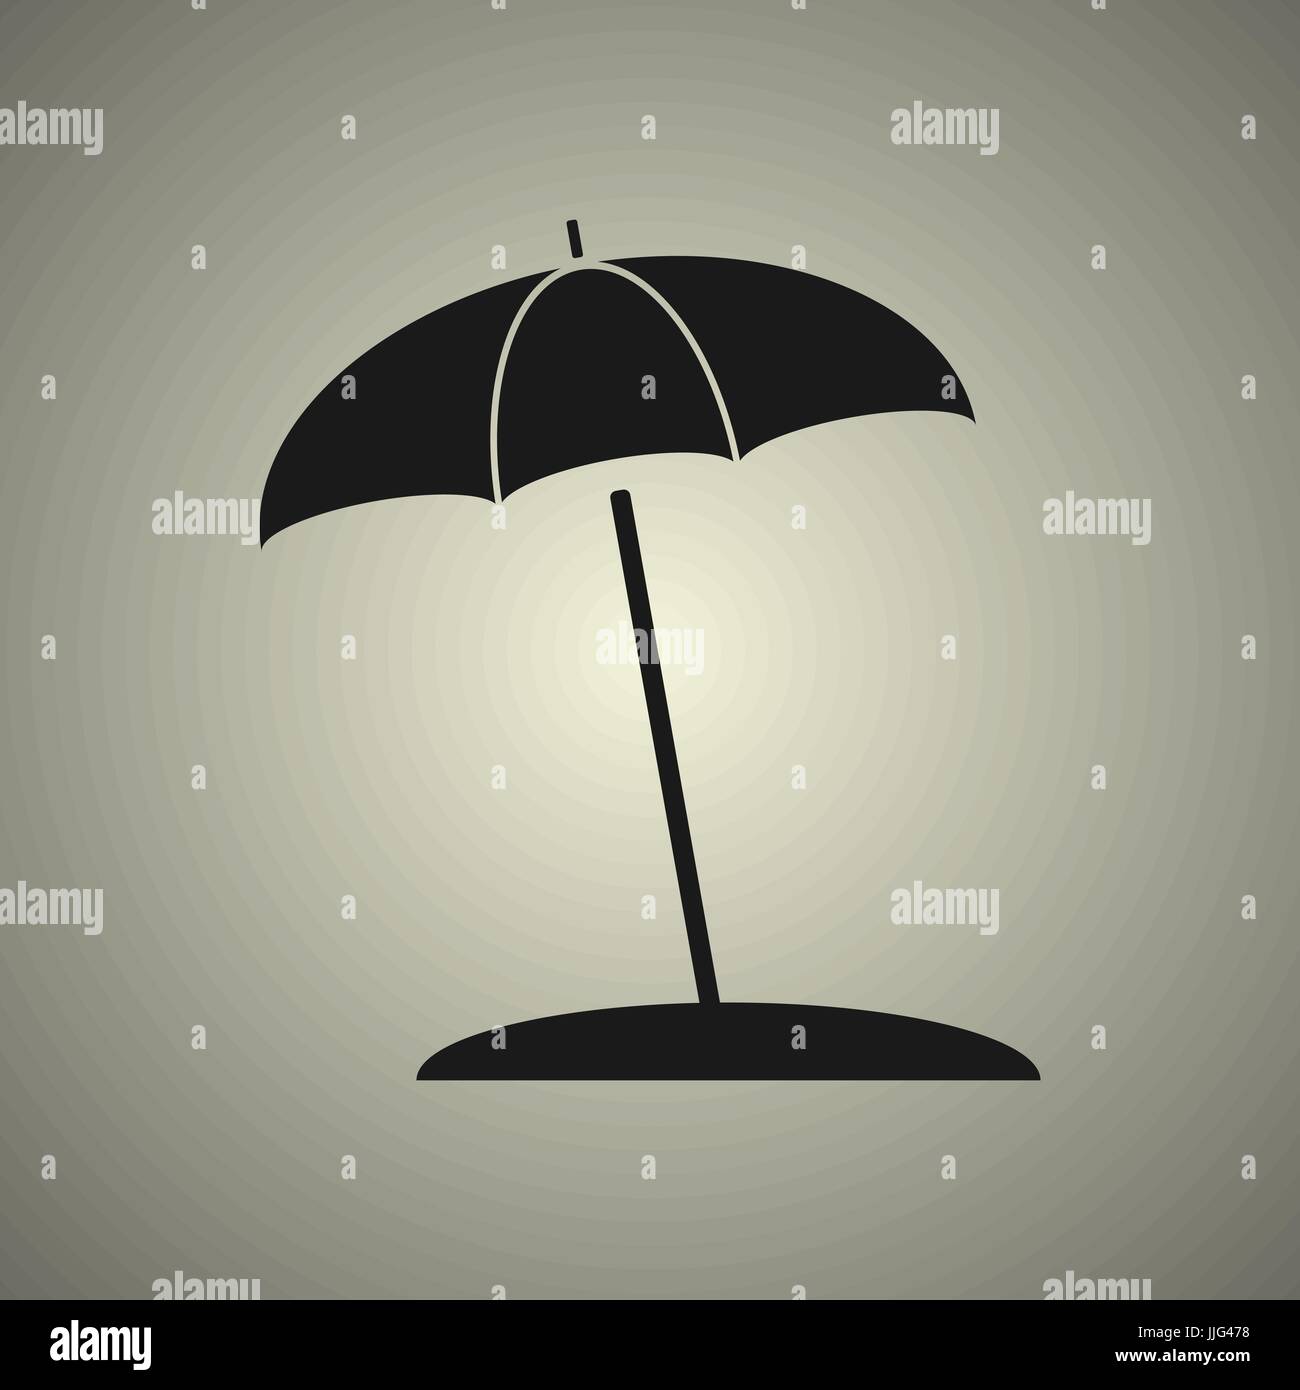 umbrella icon in black and white style, flat design Stock Vector